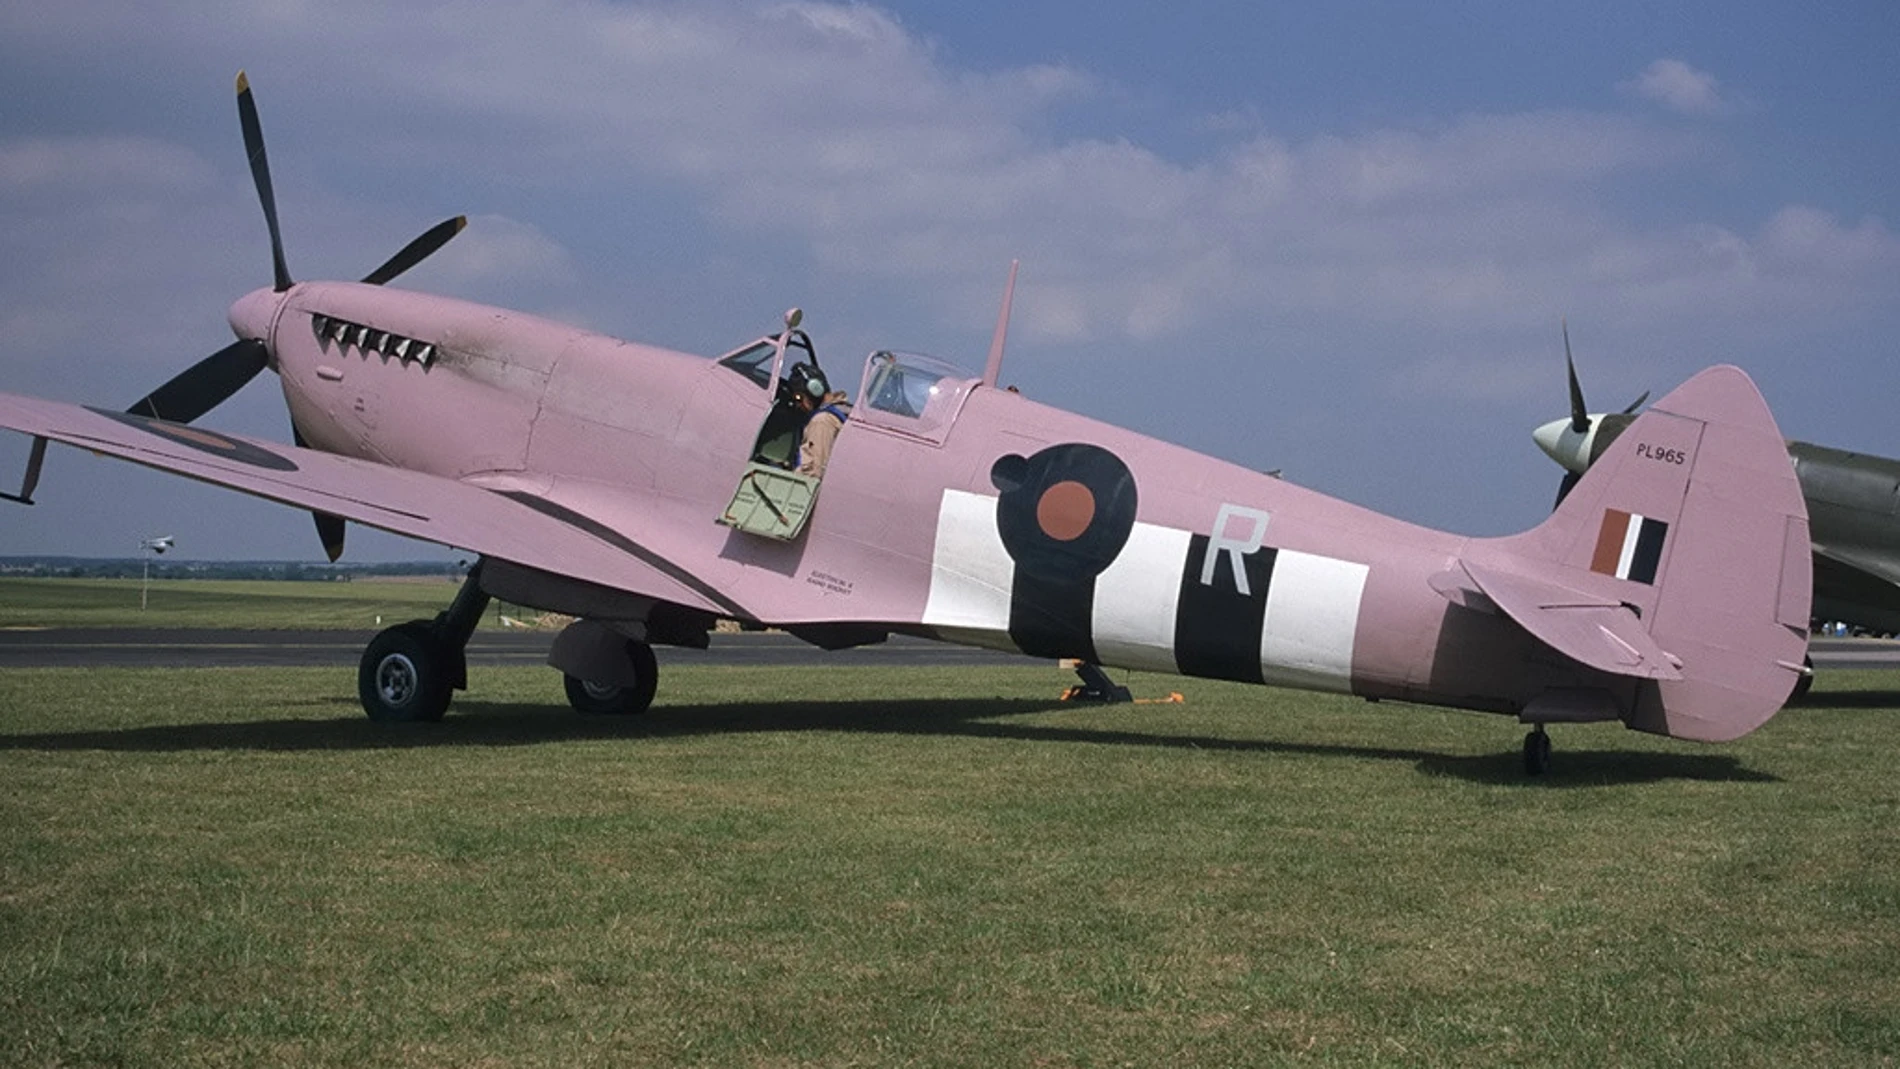 Caza monoplaza Spitfire pintado del color rosa mountbatten | Fuente: commons.wikimedia